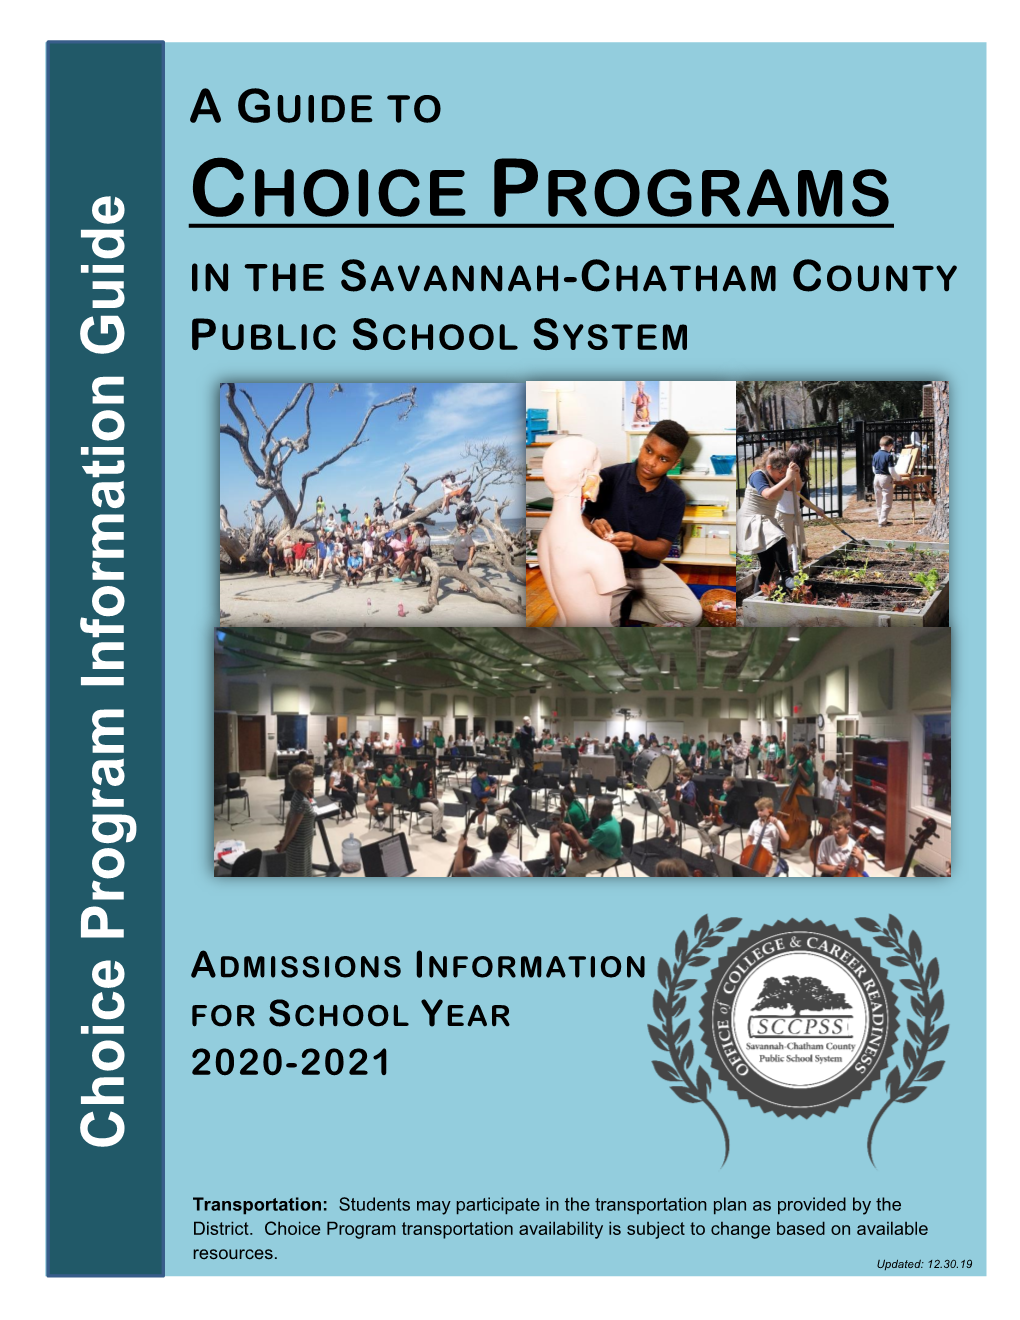 Choice Program Information Guide